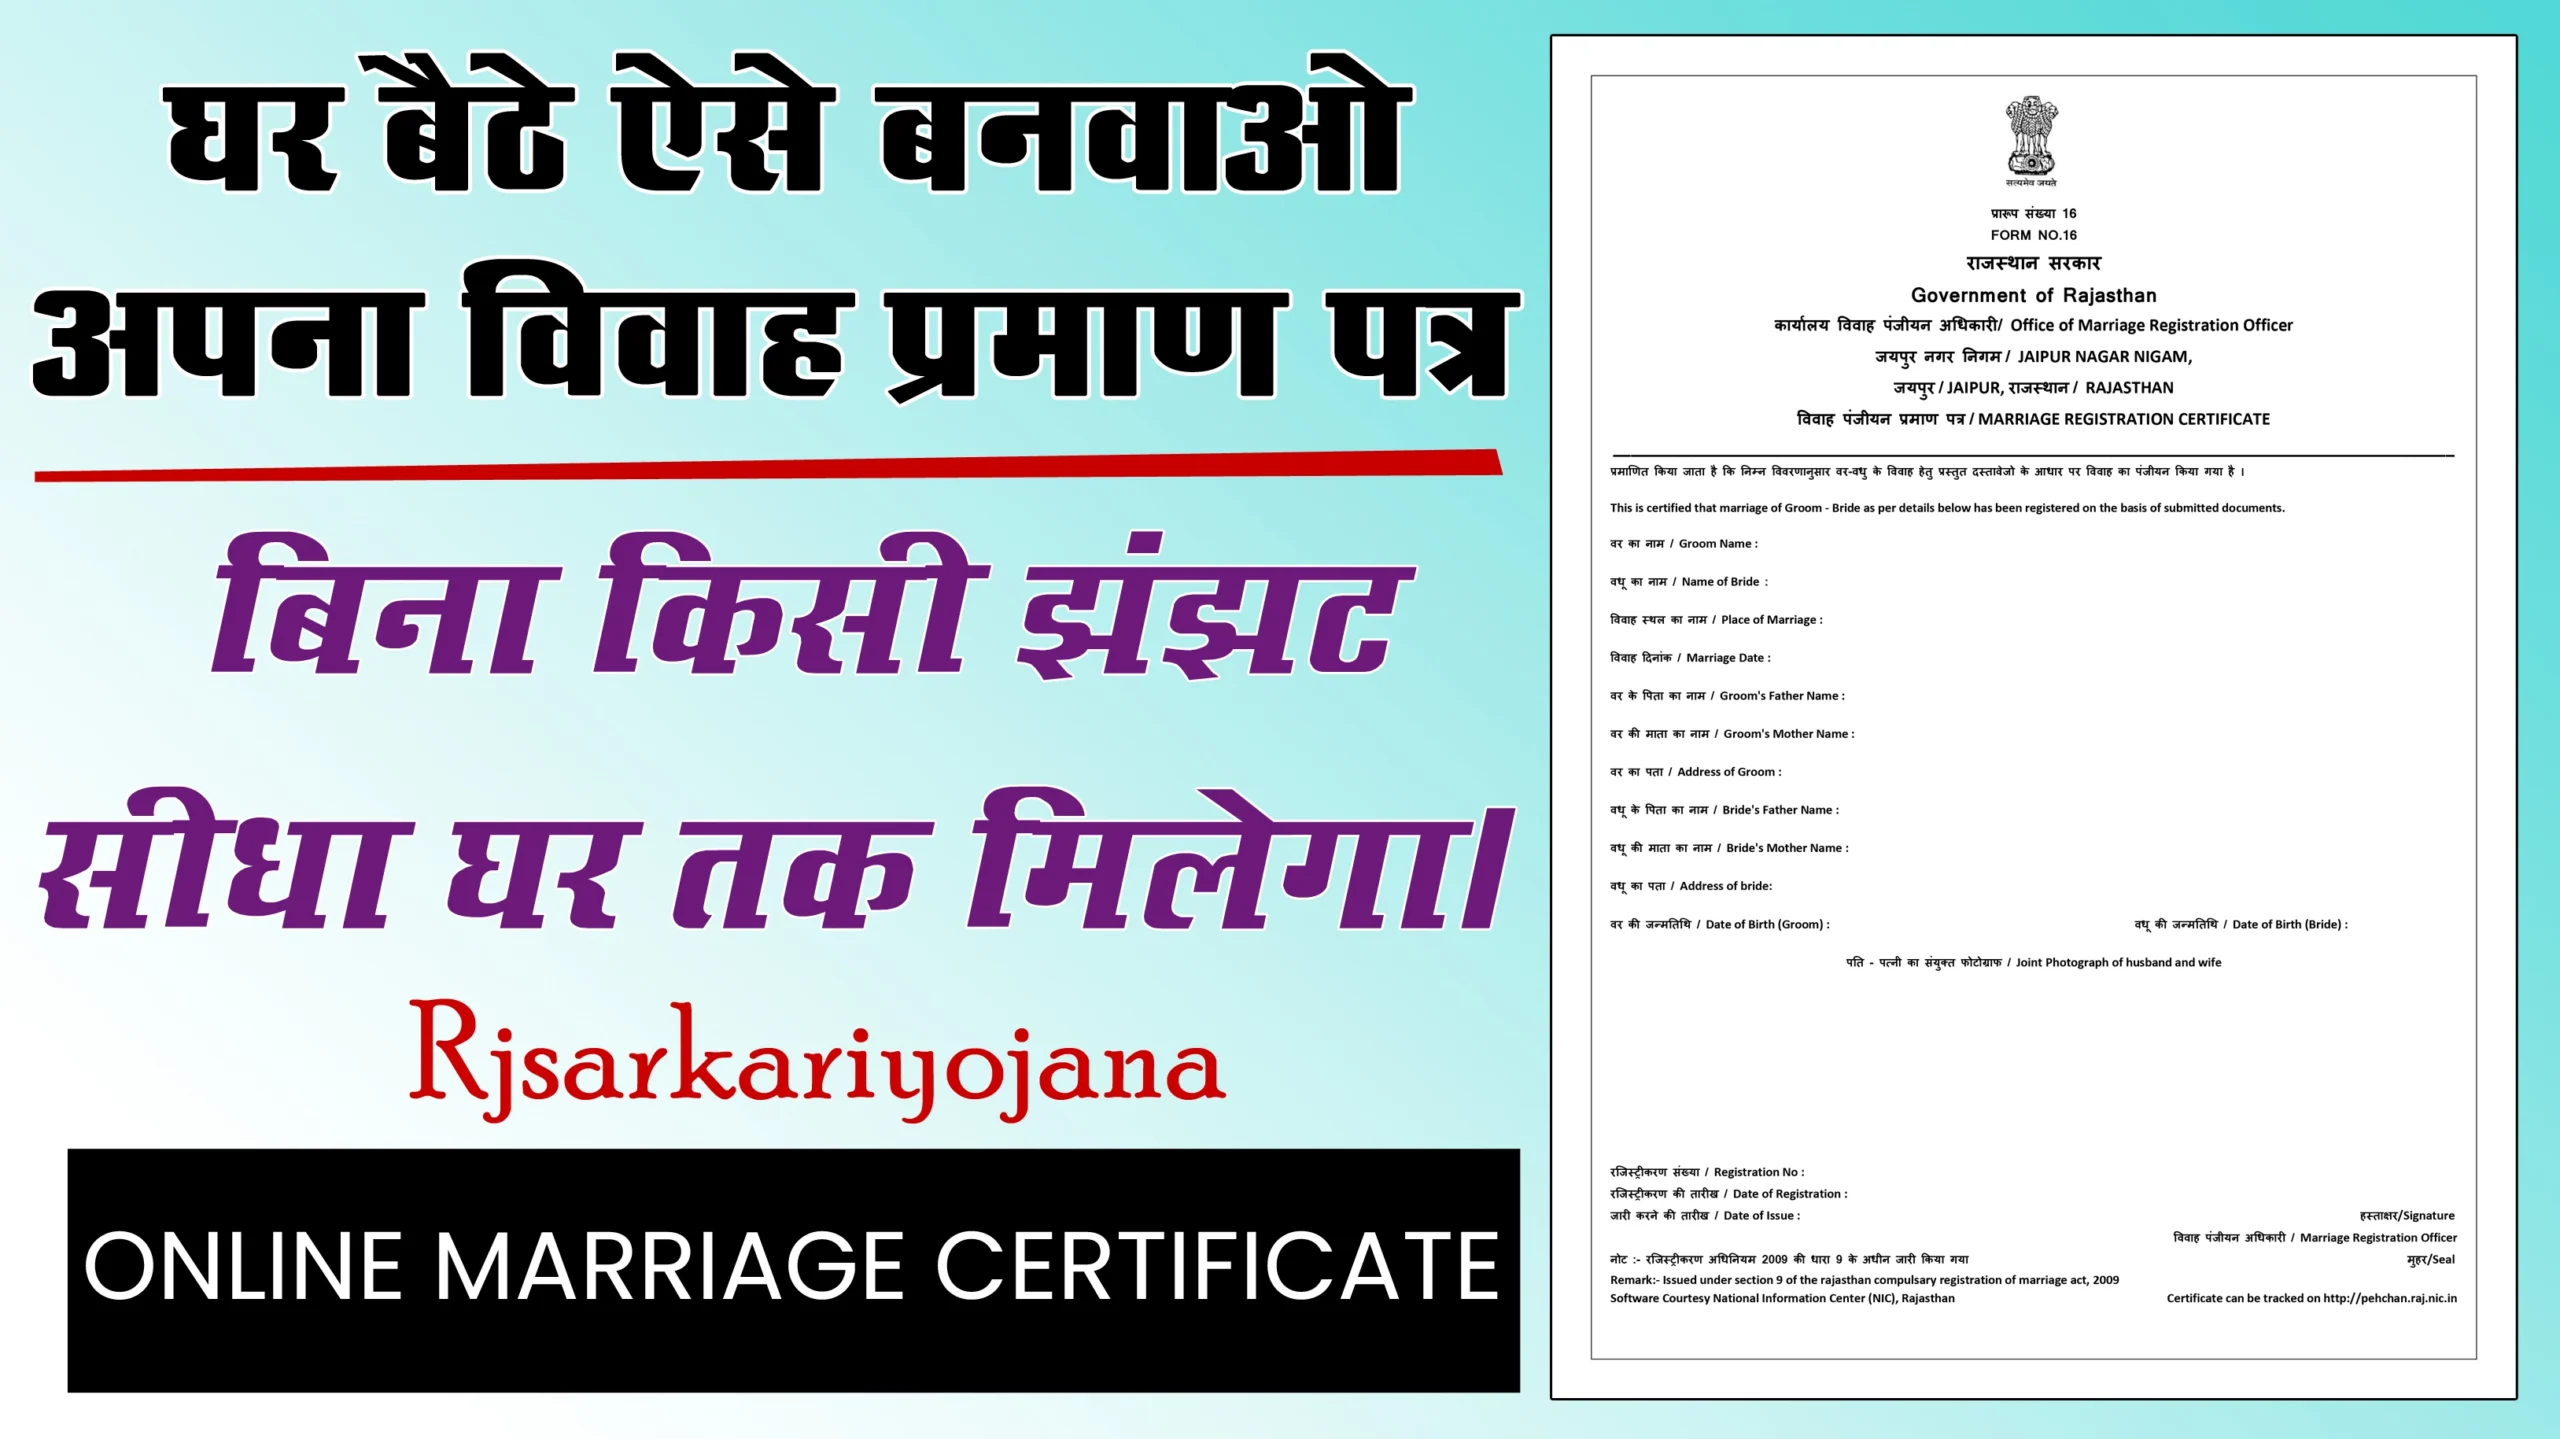 Marriage certificate kaise banaye